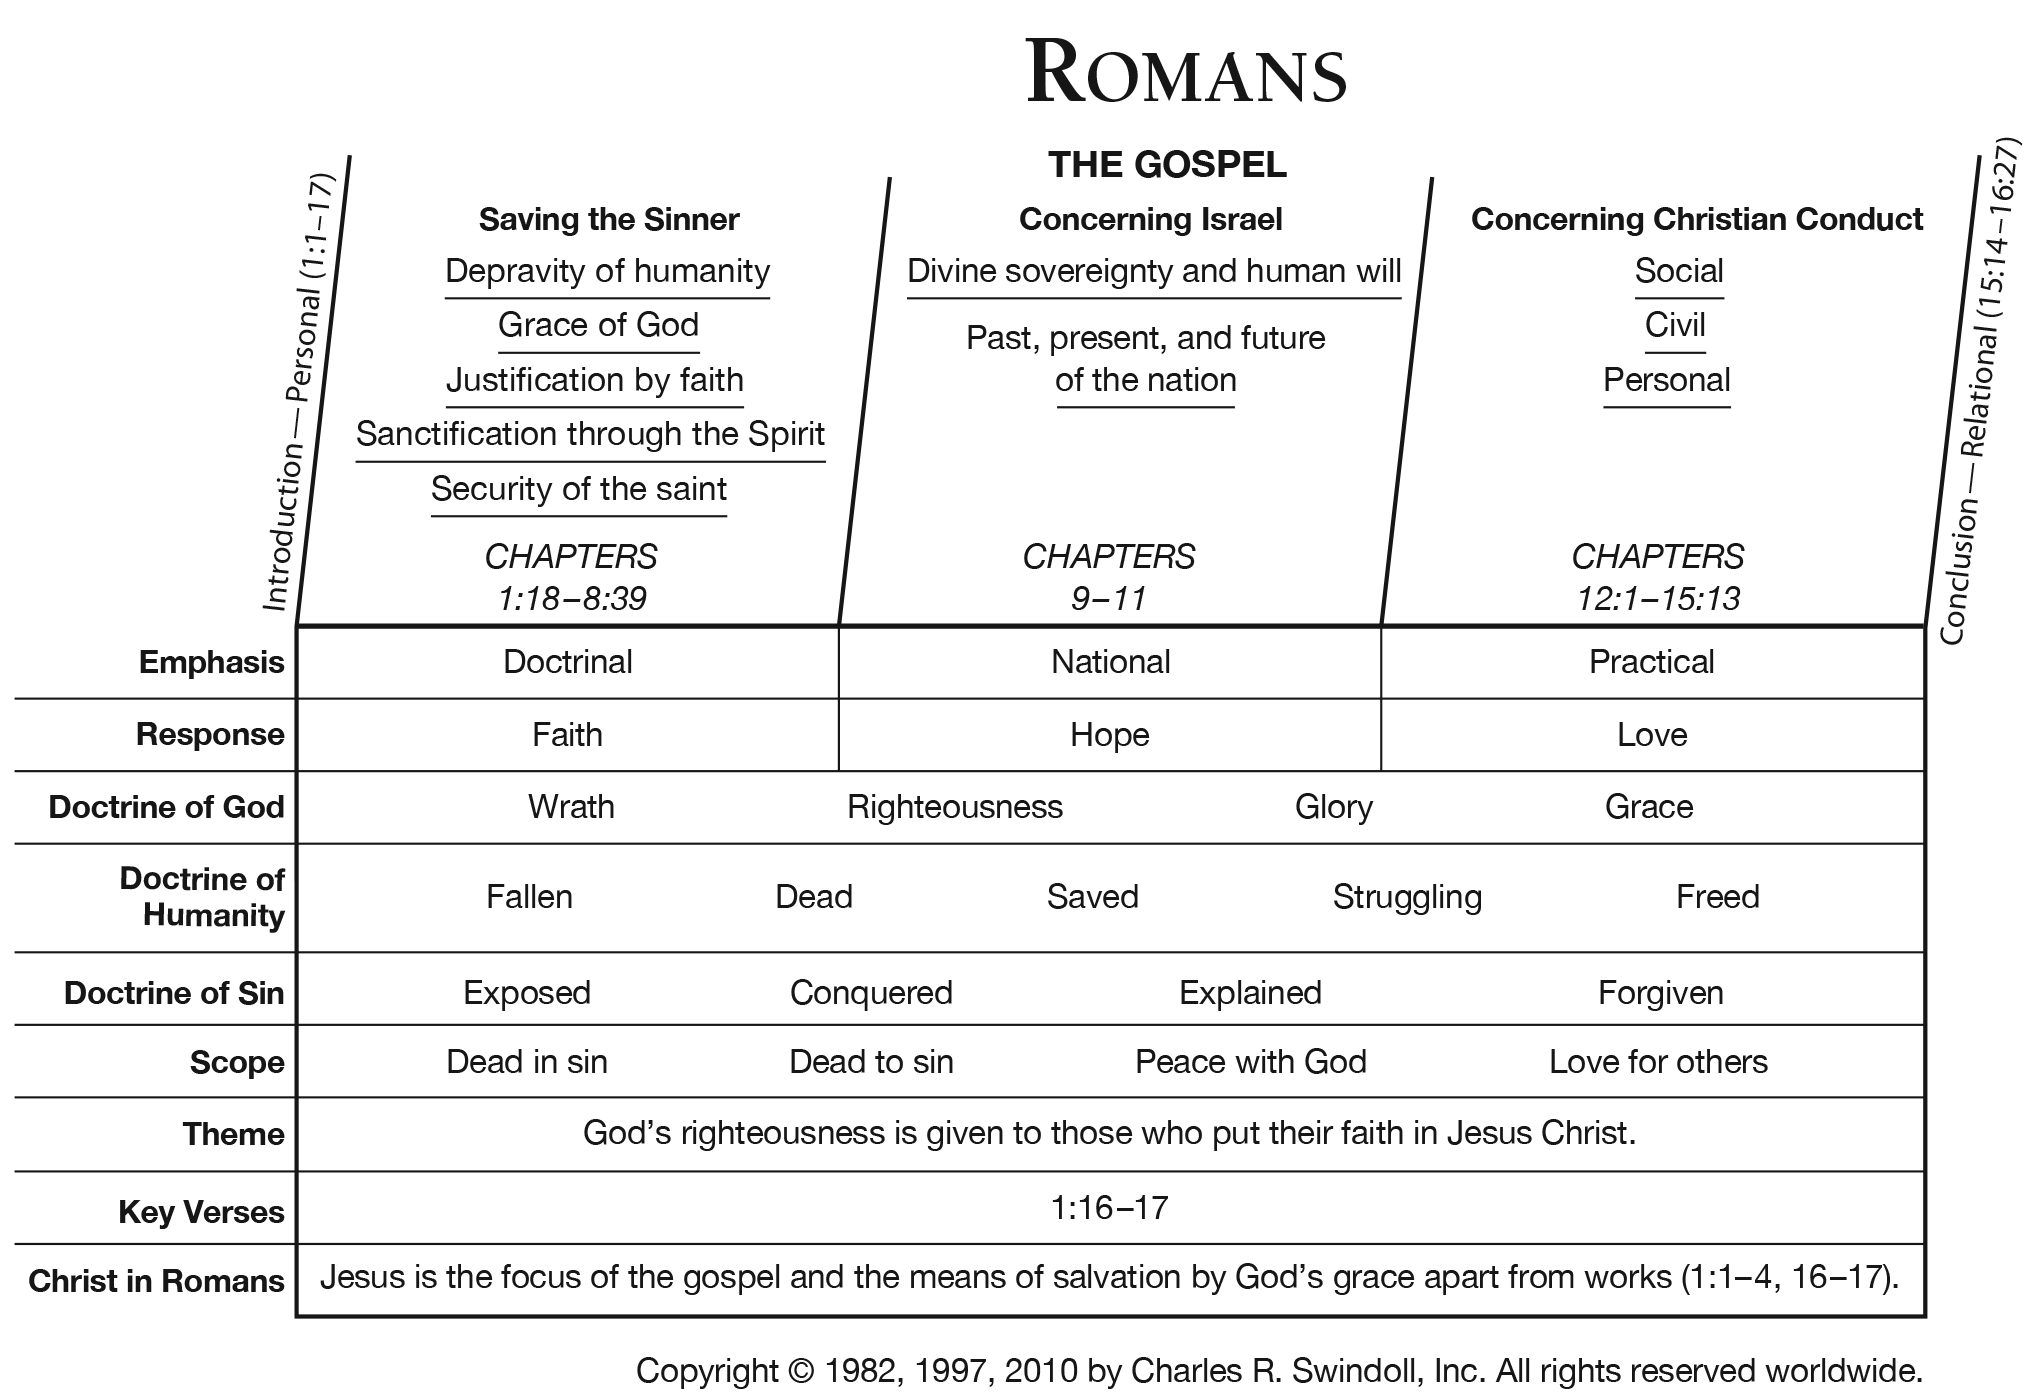 Summary | The Romans